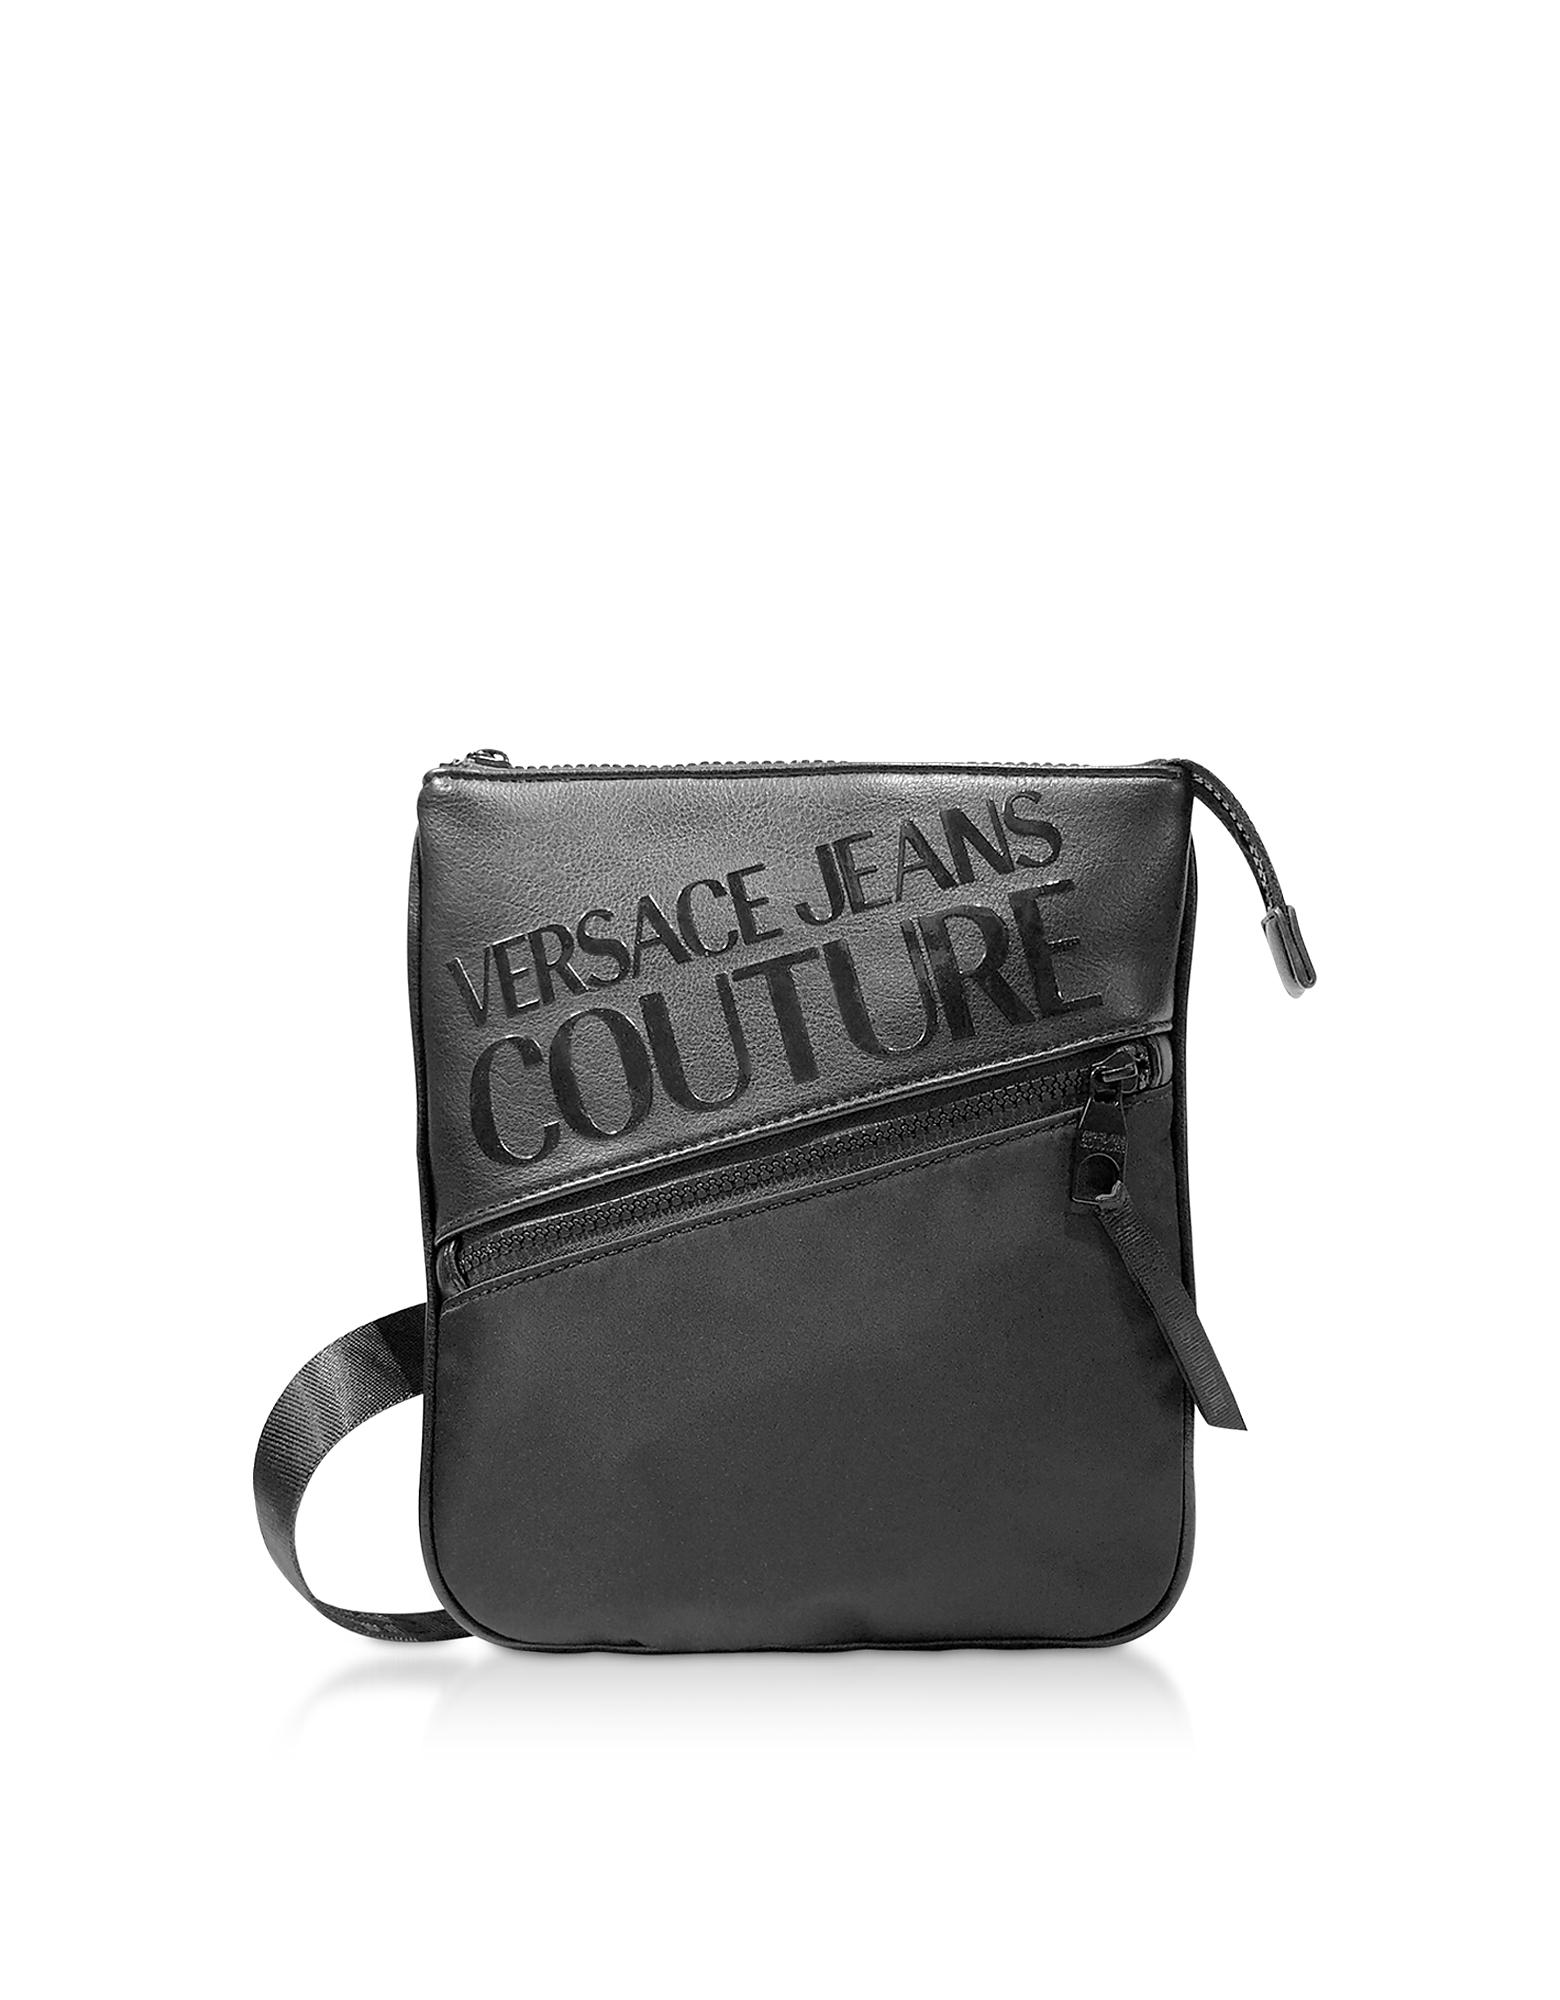 Versace Jeans Black Signature Men's Crossbody Bag for Men - Lyst